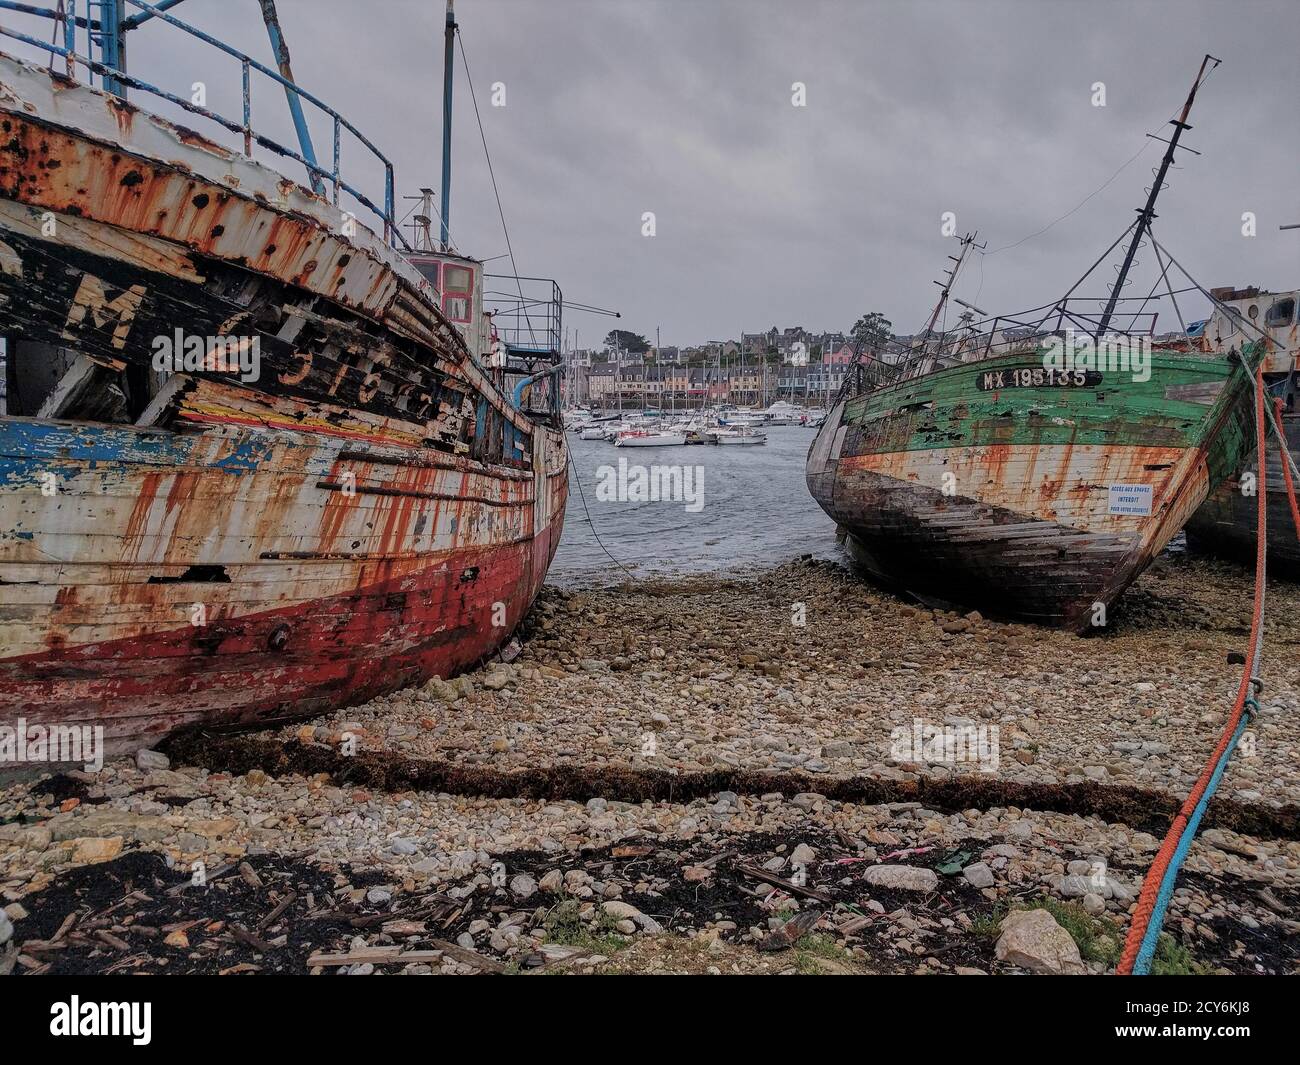 Old shipwrecks stranded in a harbor in Brittany, France. Stock Photo